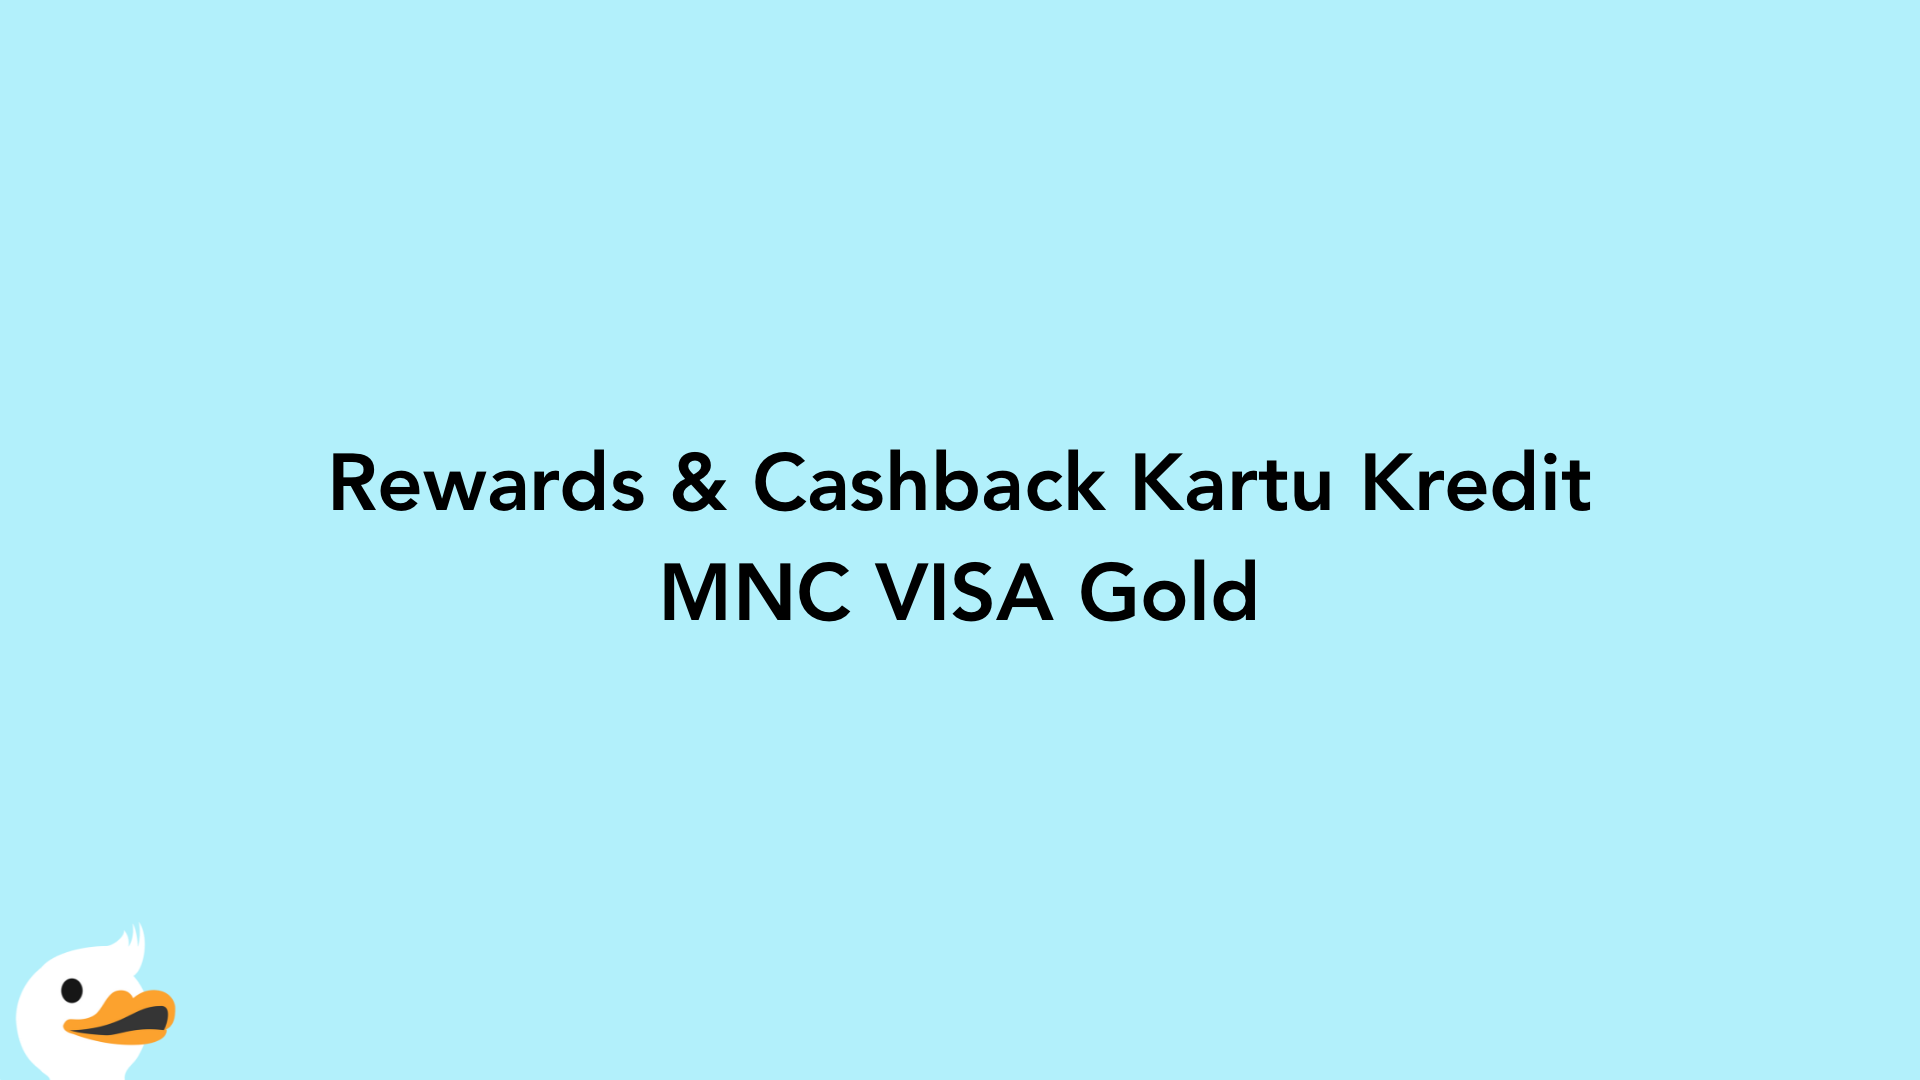 Rewards & Cashback Kartu Kredit MNC VISA Gold